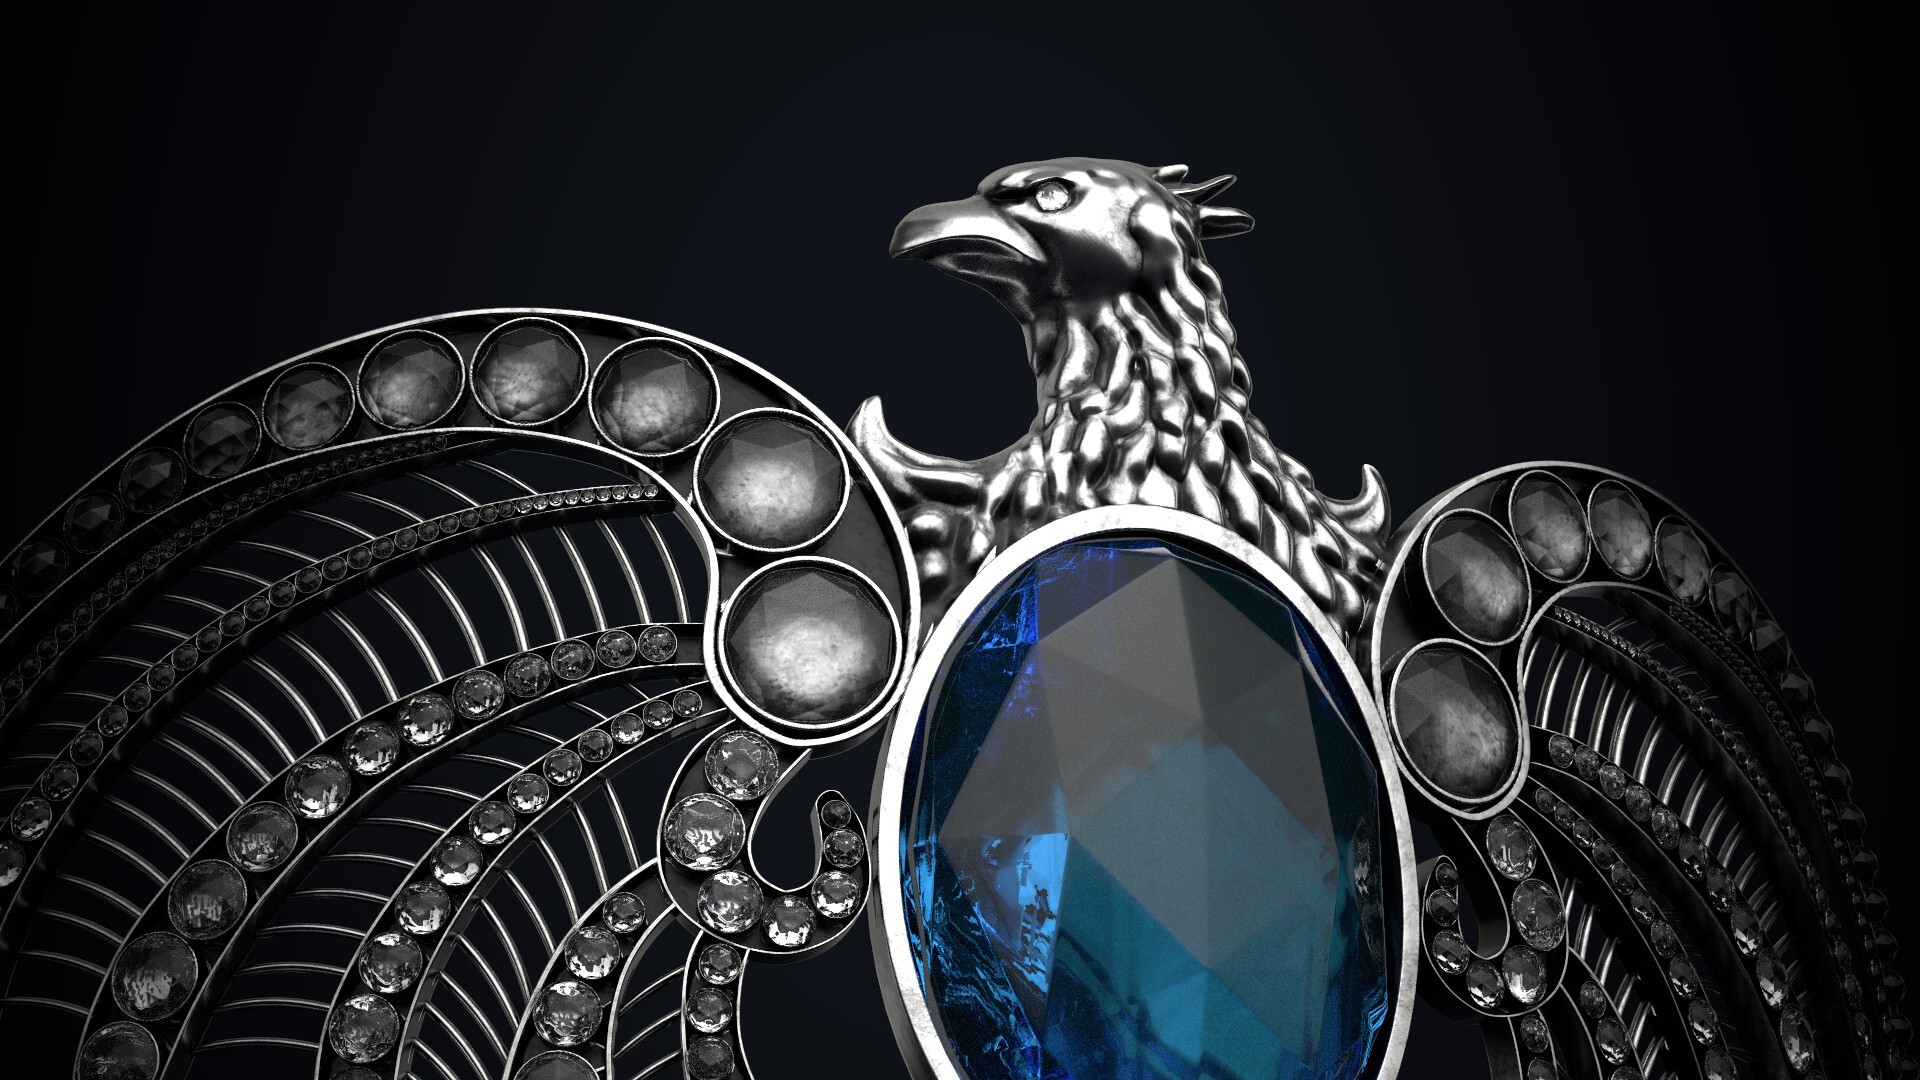 Ravenclaw's diadem